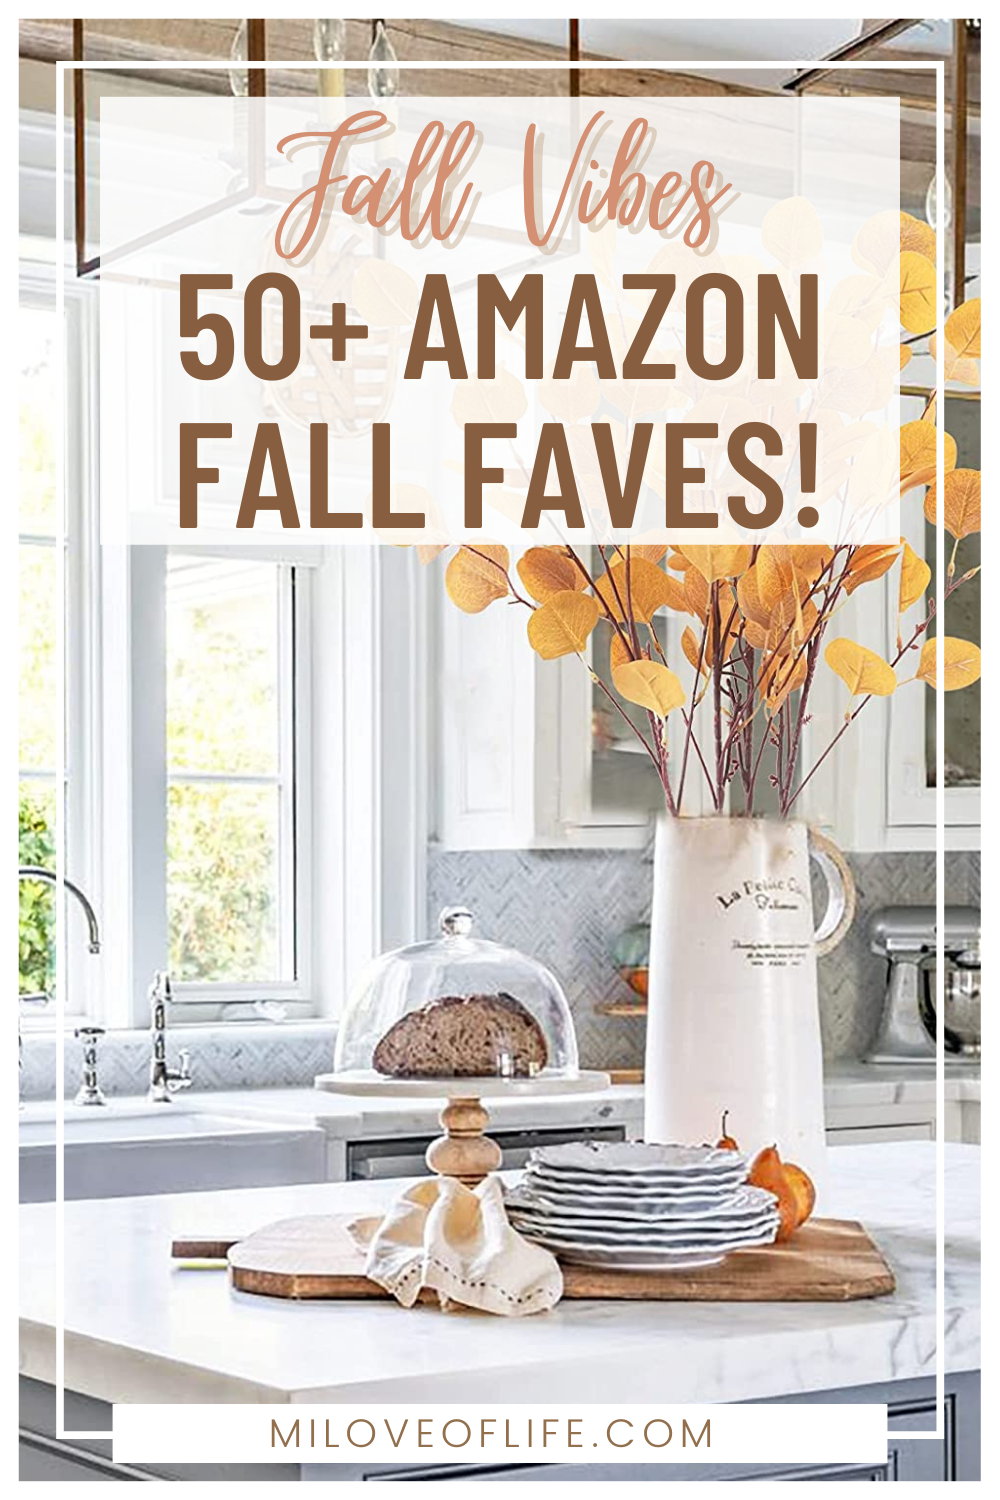 Fall Vibes| 50+ Amazon Fall Favorites